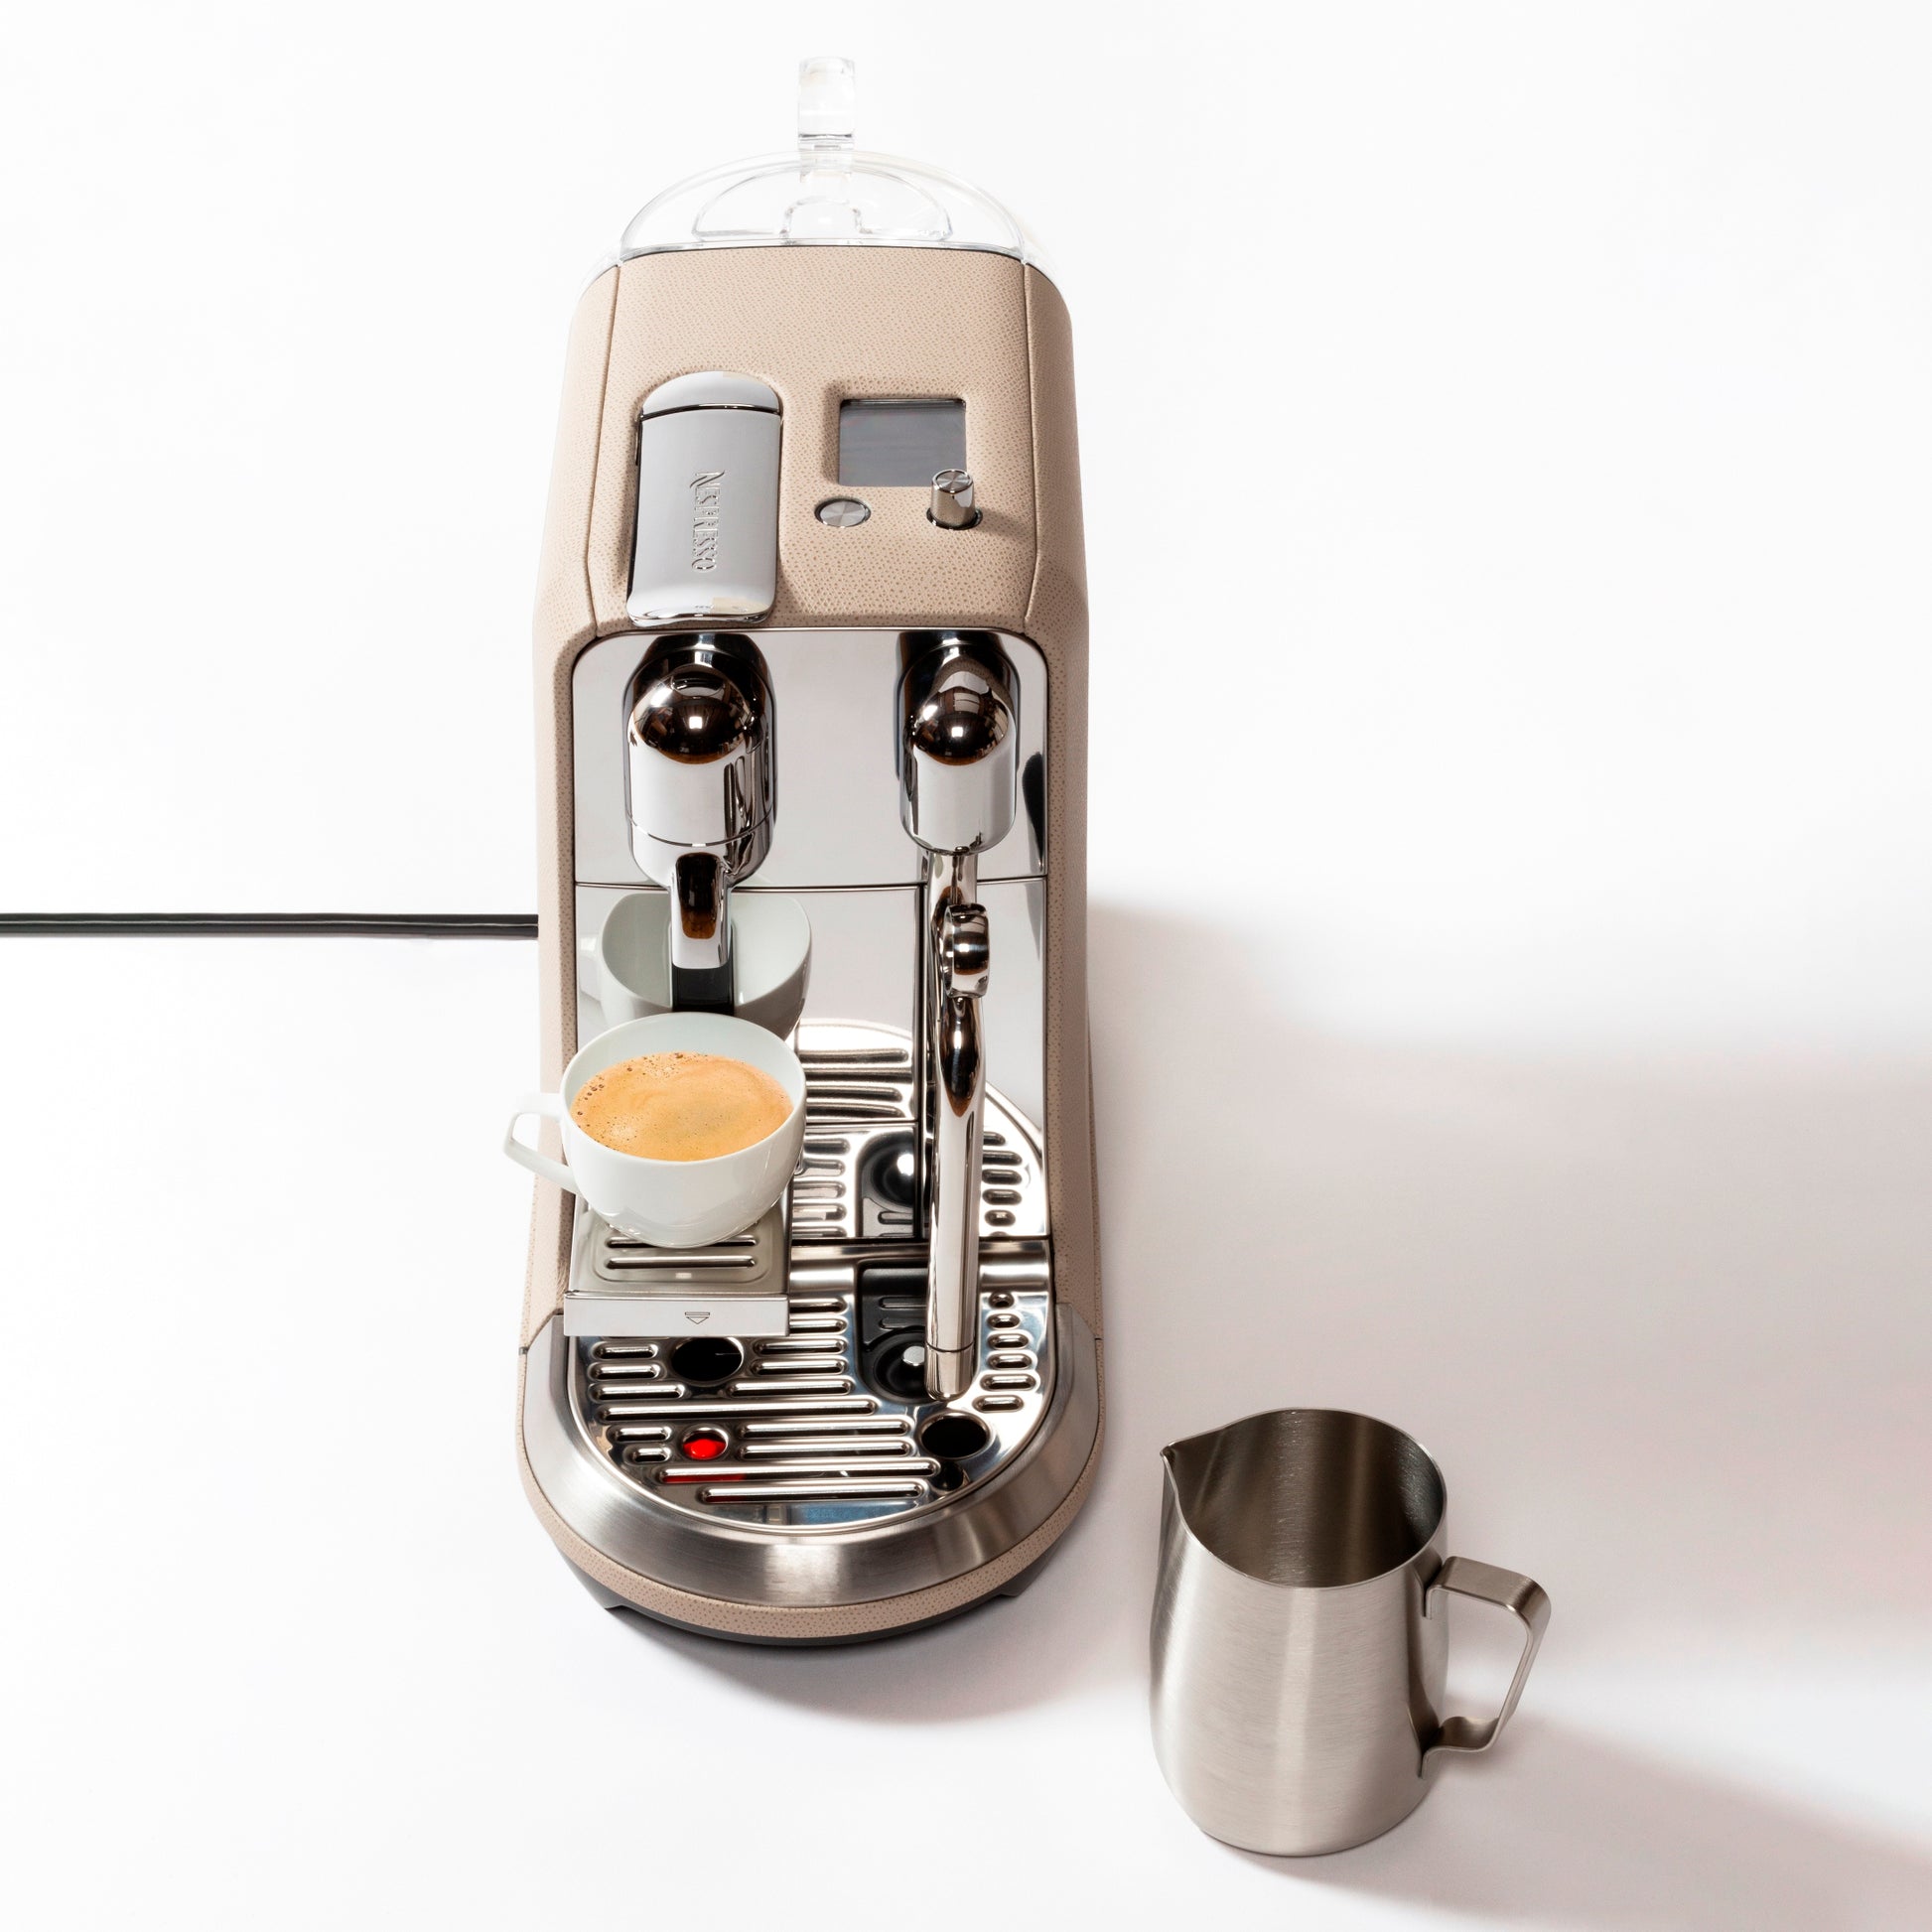 Pigment France Creatista Plus Coffee Machine | Premium Kitchen Appliances, Stylish Coffee Makers & Unique Gifts | 2Jour Concierge